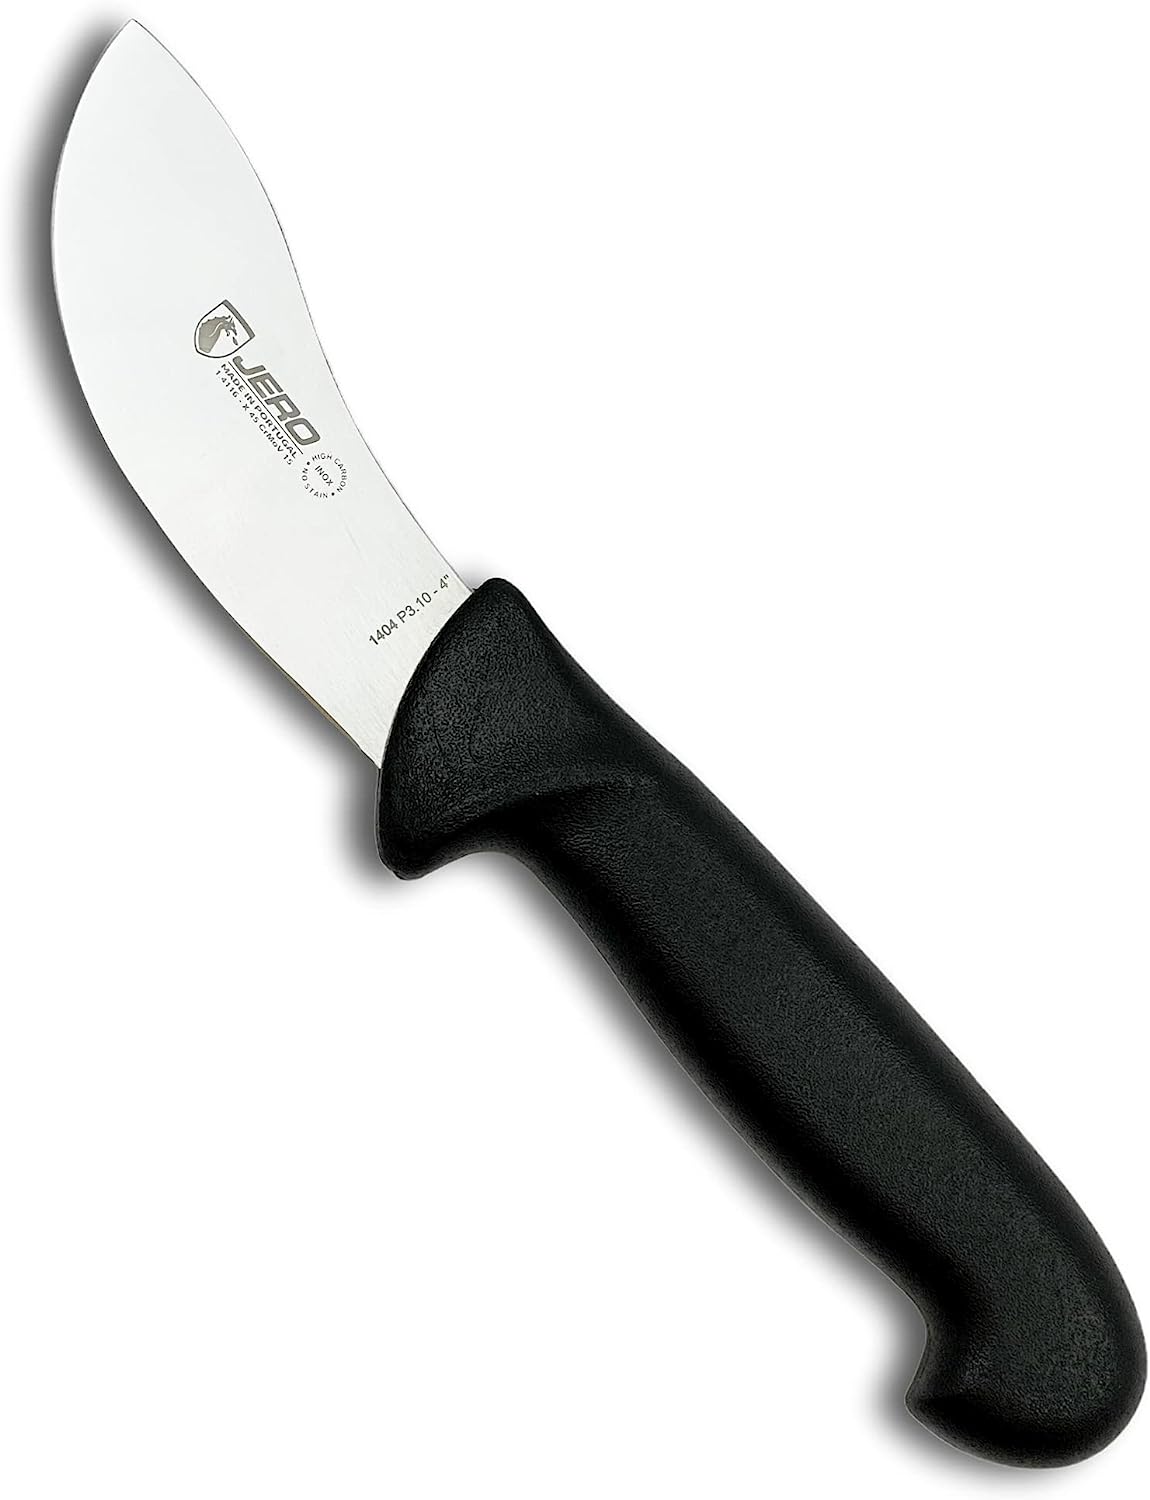 Jero Angelo Skinner - 4 Inch Blade Specialty Skinning Butcher Knife - Lamb, Goat, Deer Processing